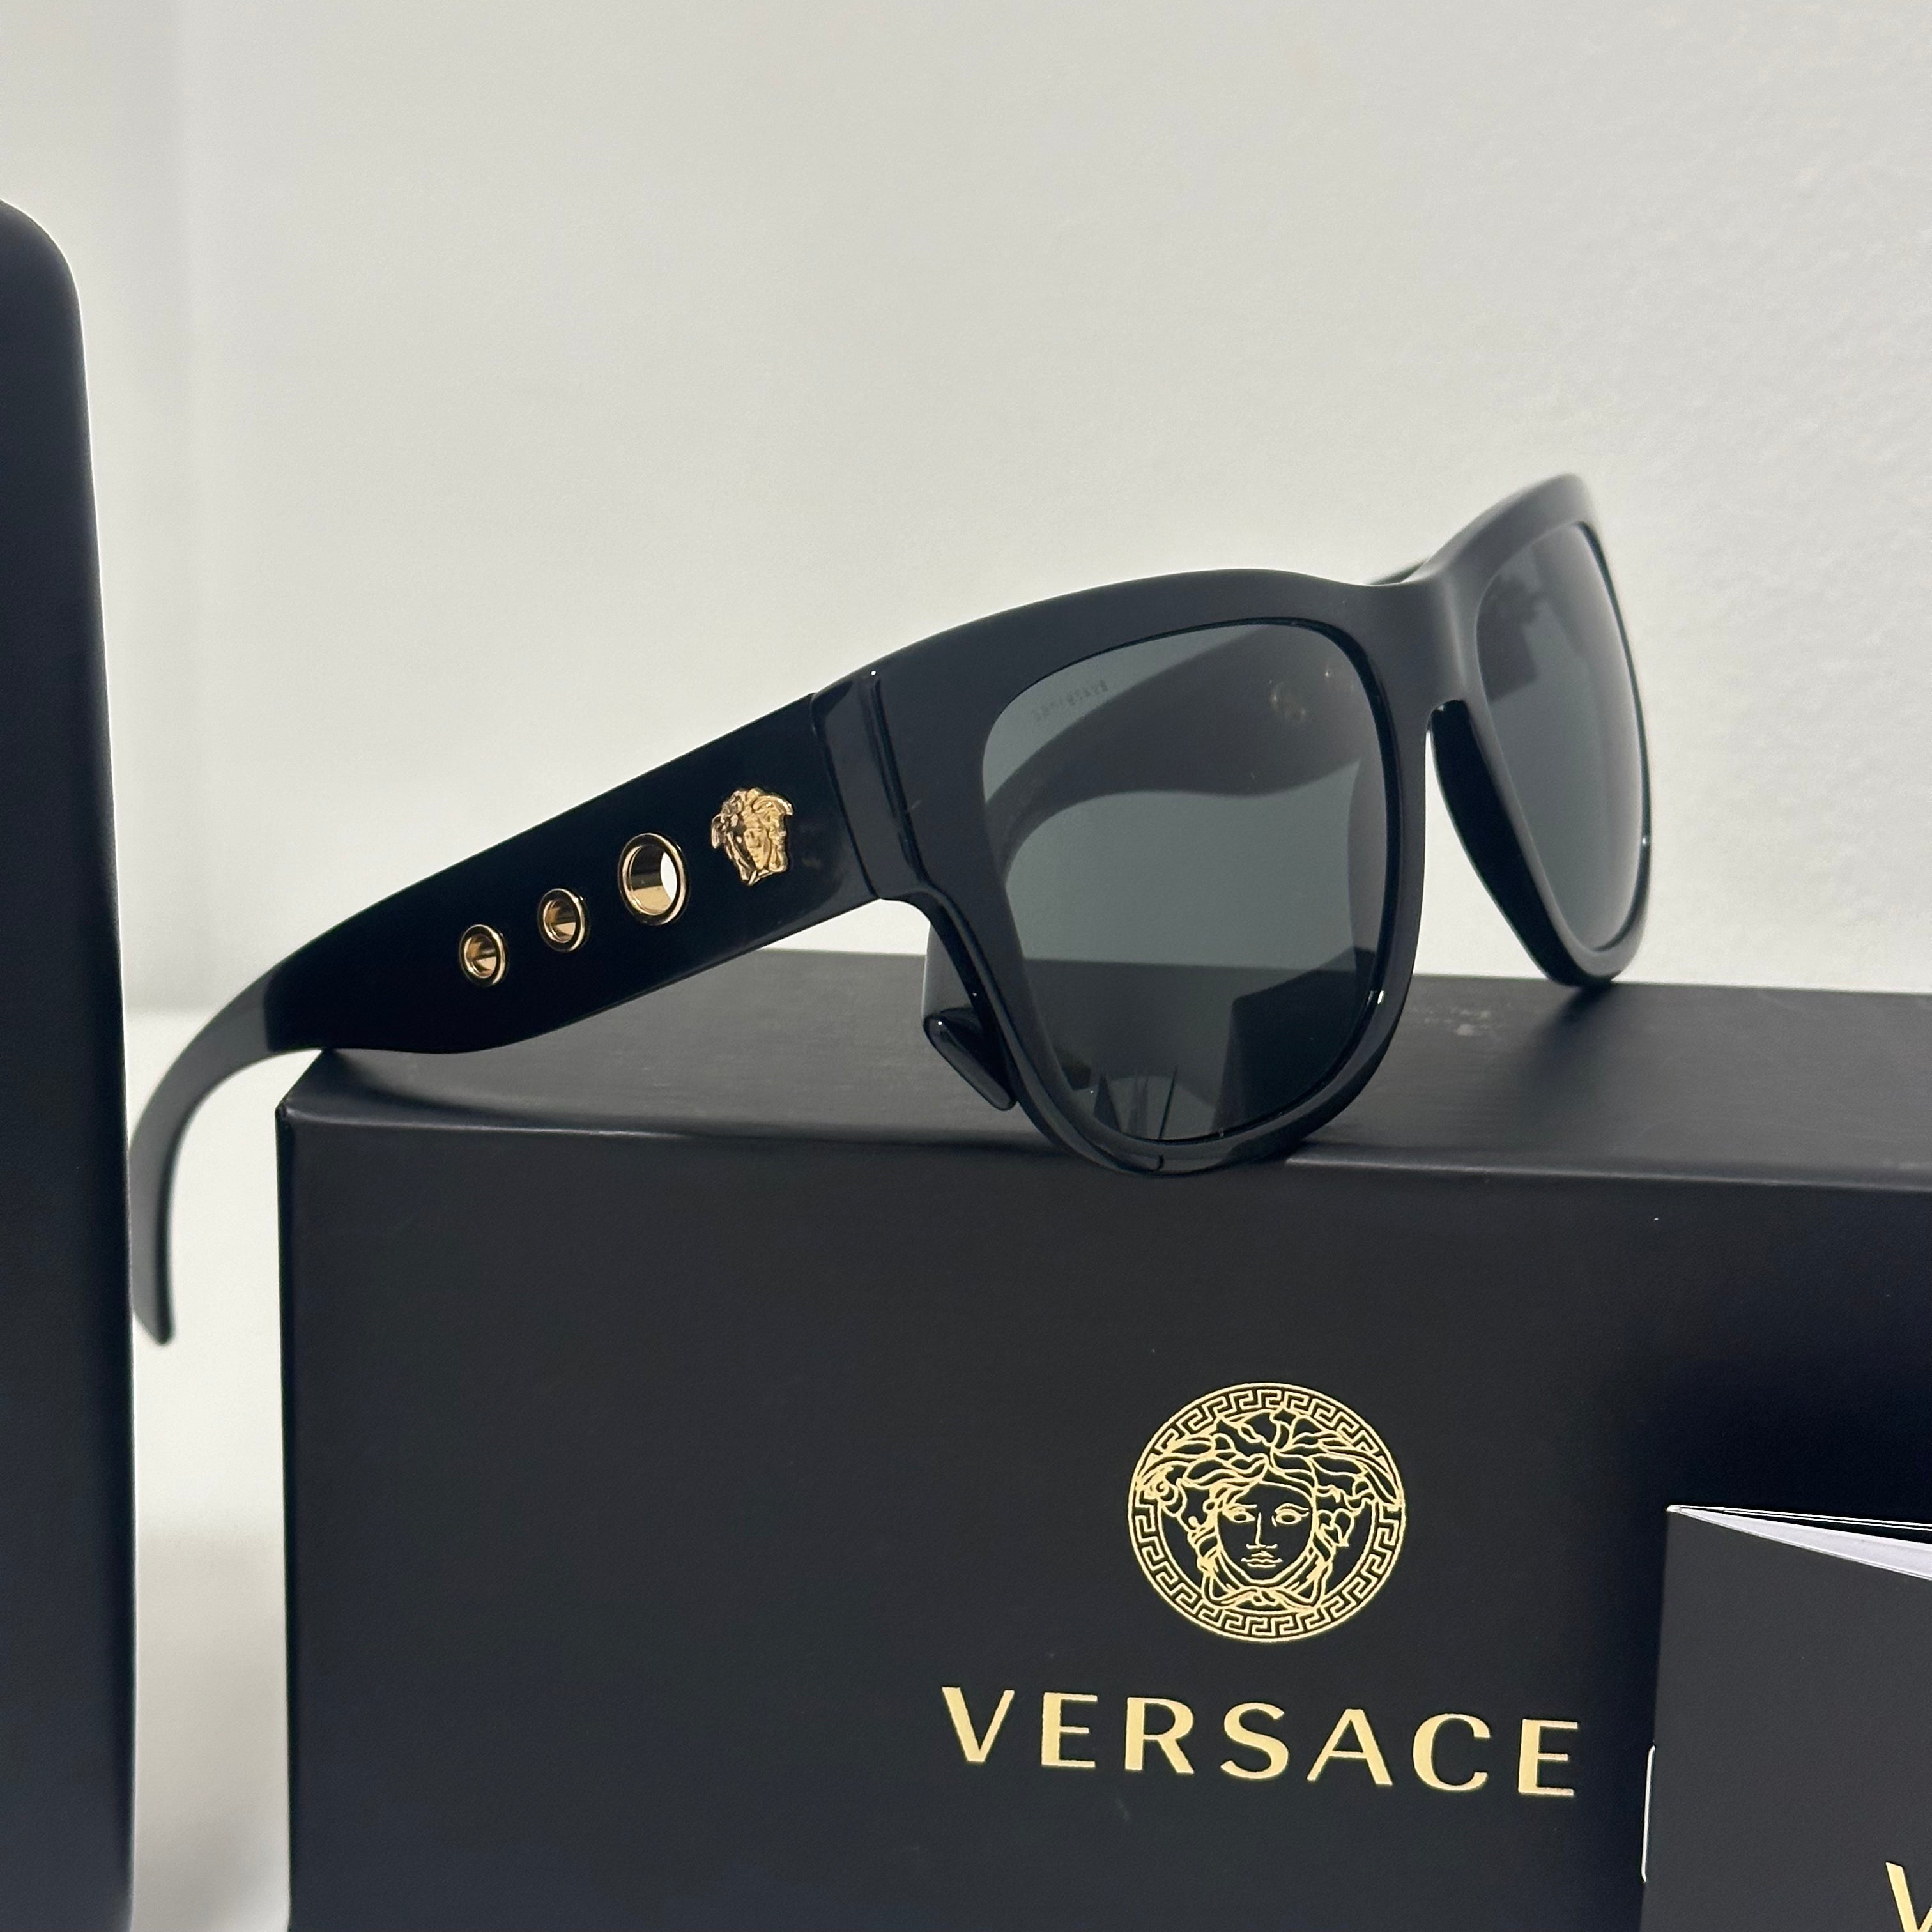 فيرساتشي - نظارات شمسية